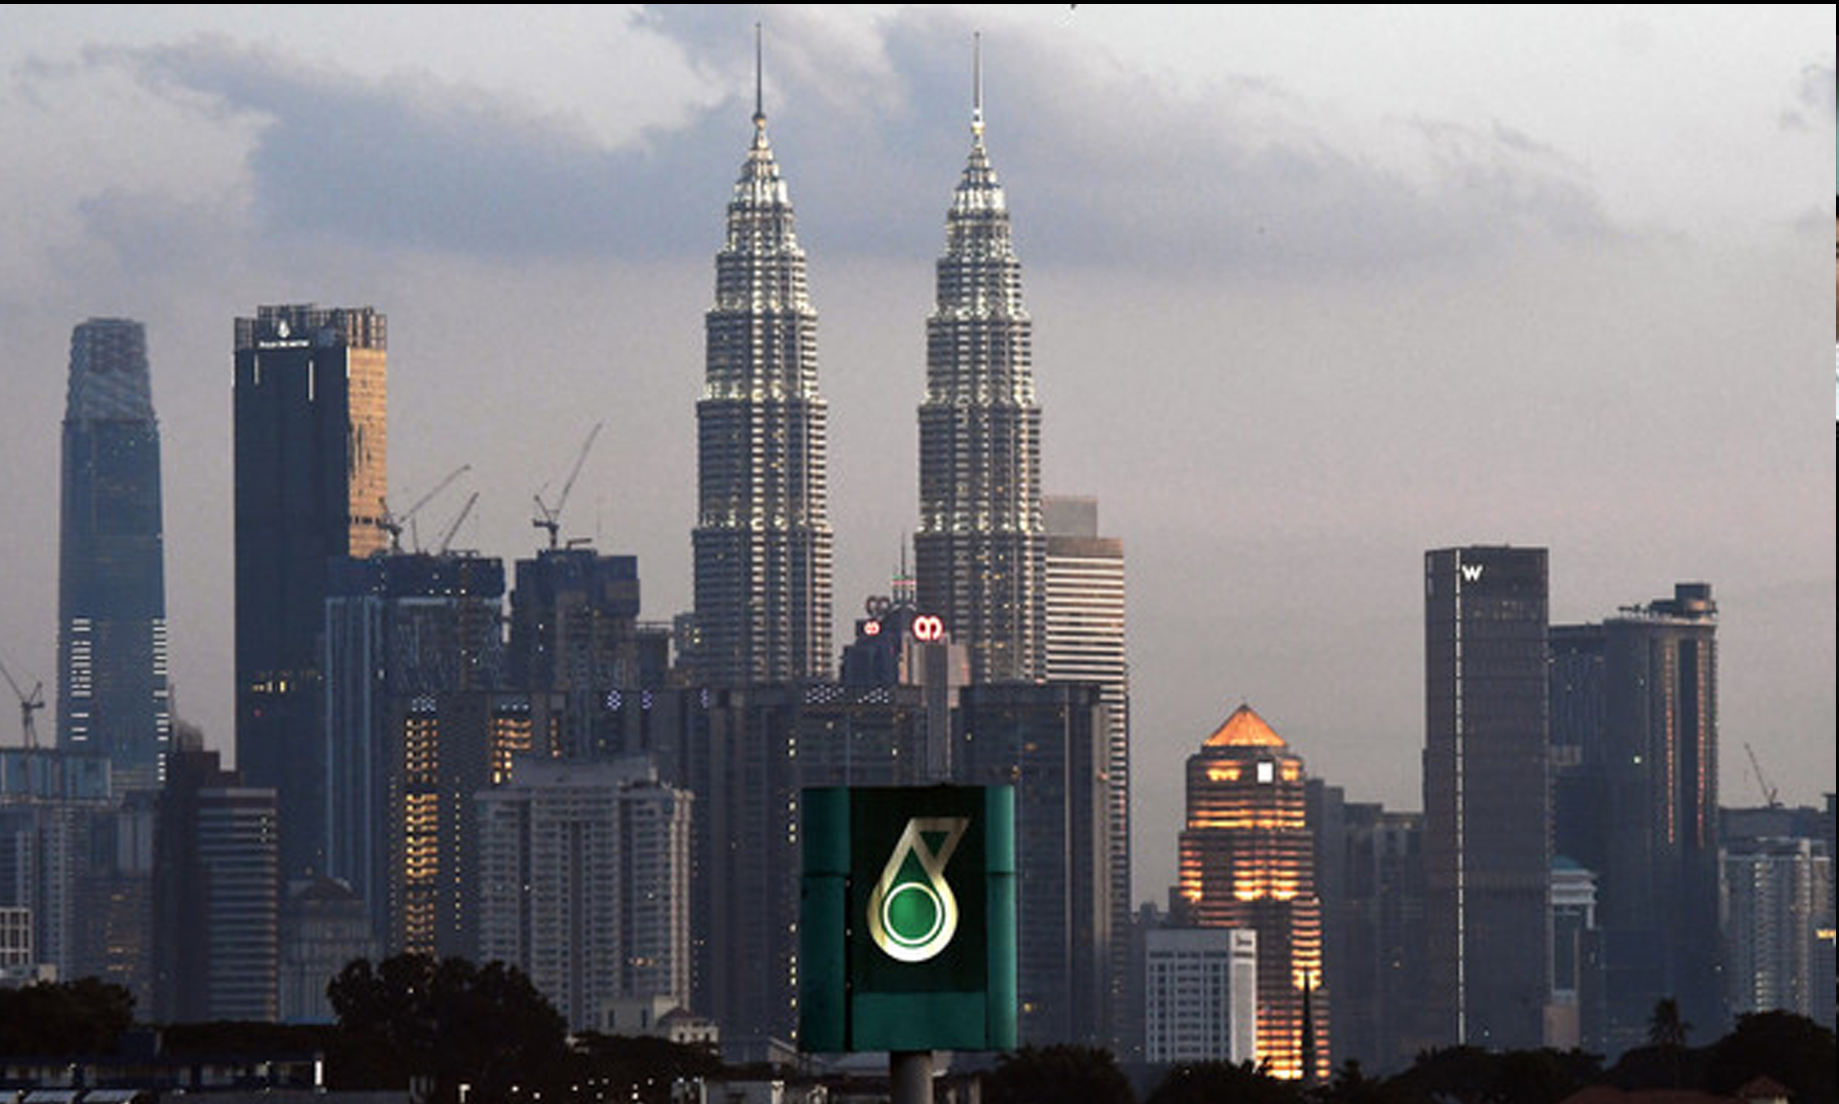 Profit for Malaysia’s oil company Petronas soars to RM55.3 bln